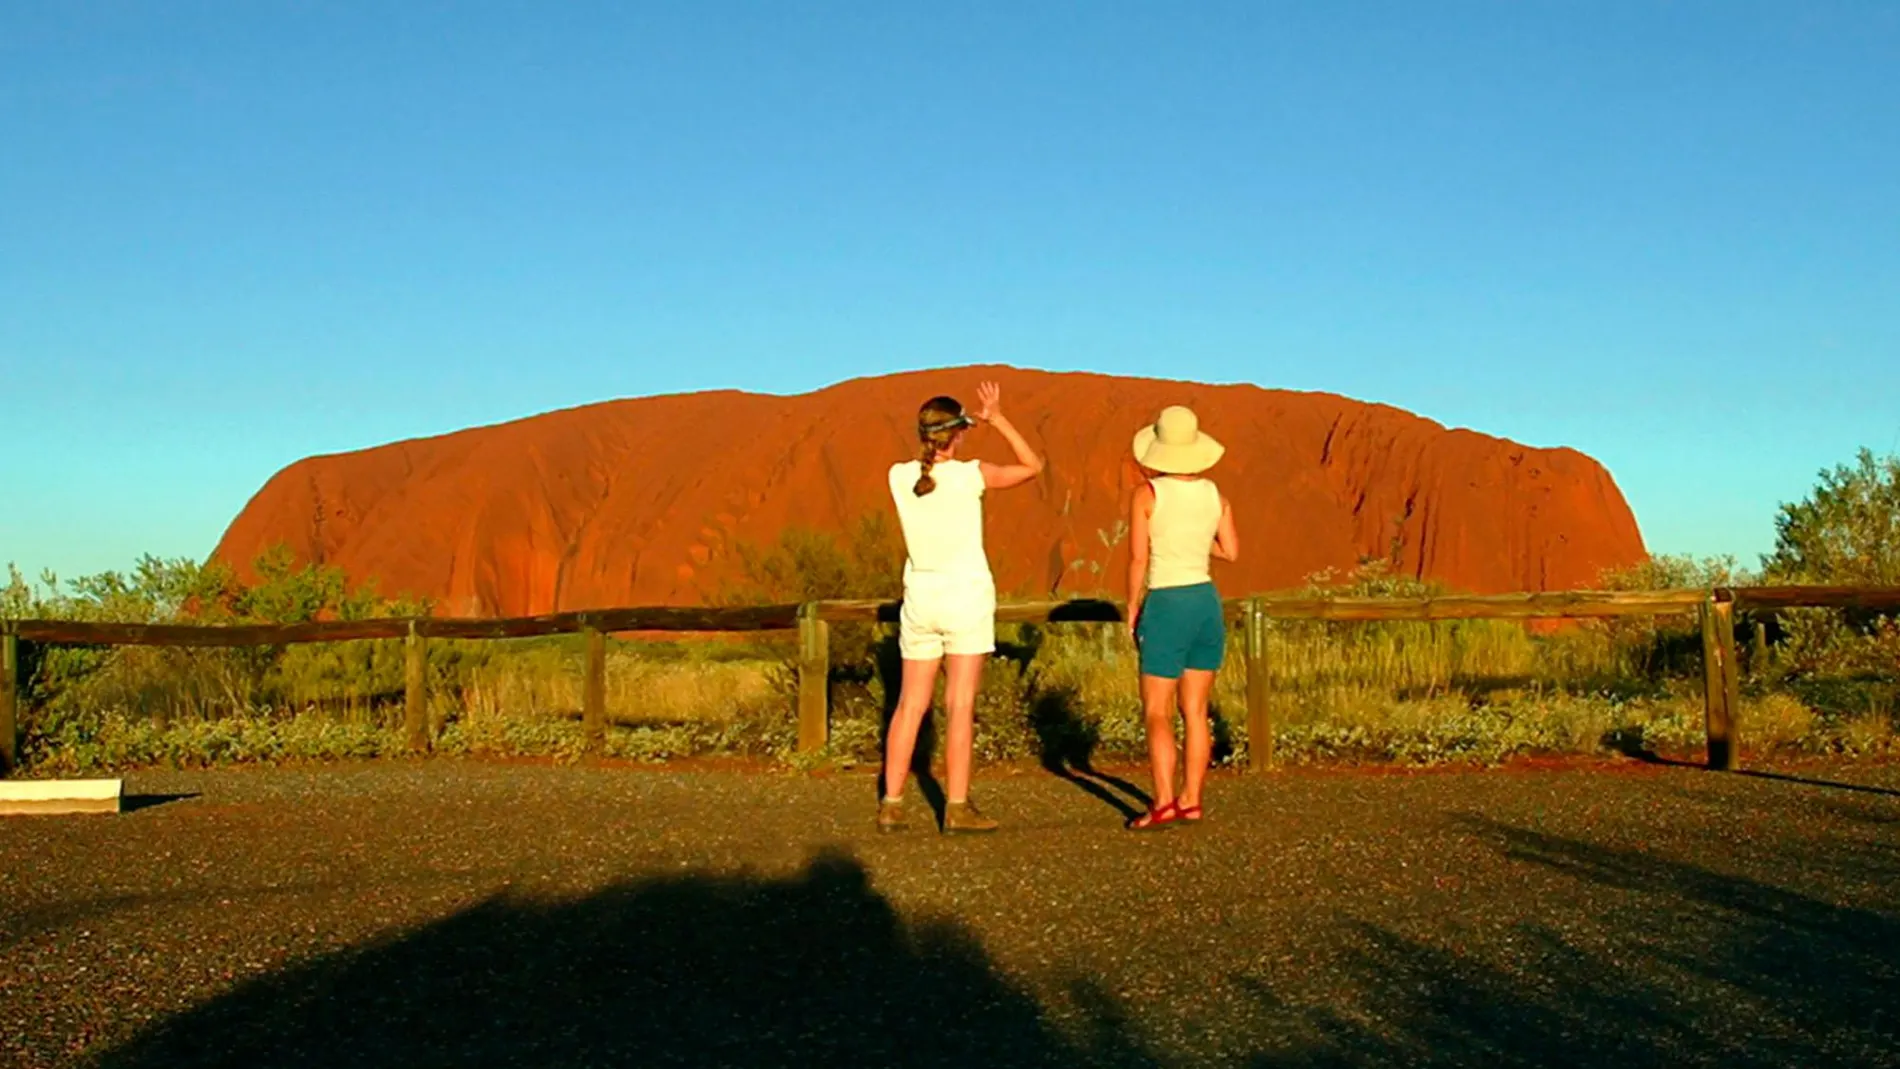 Dos turistas observan la imponente Ayers Rock, en Australia / Tim Wimborne